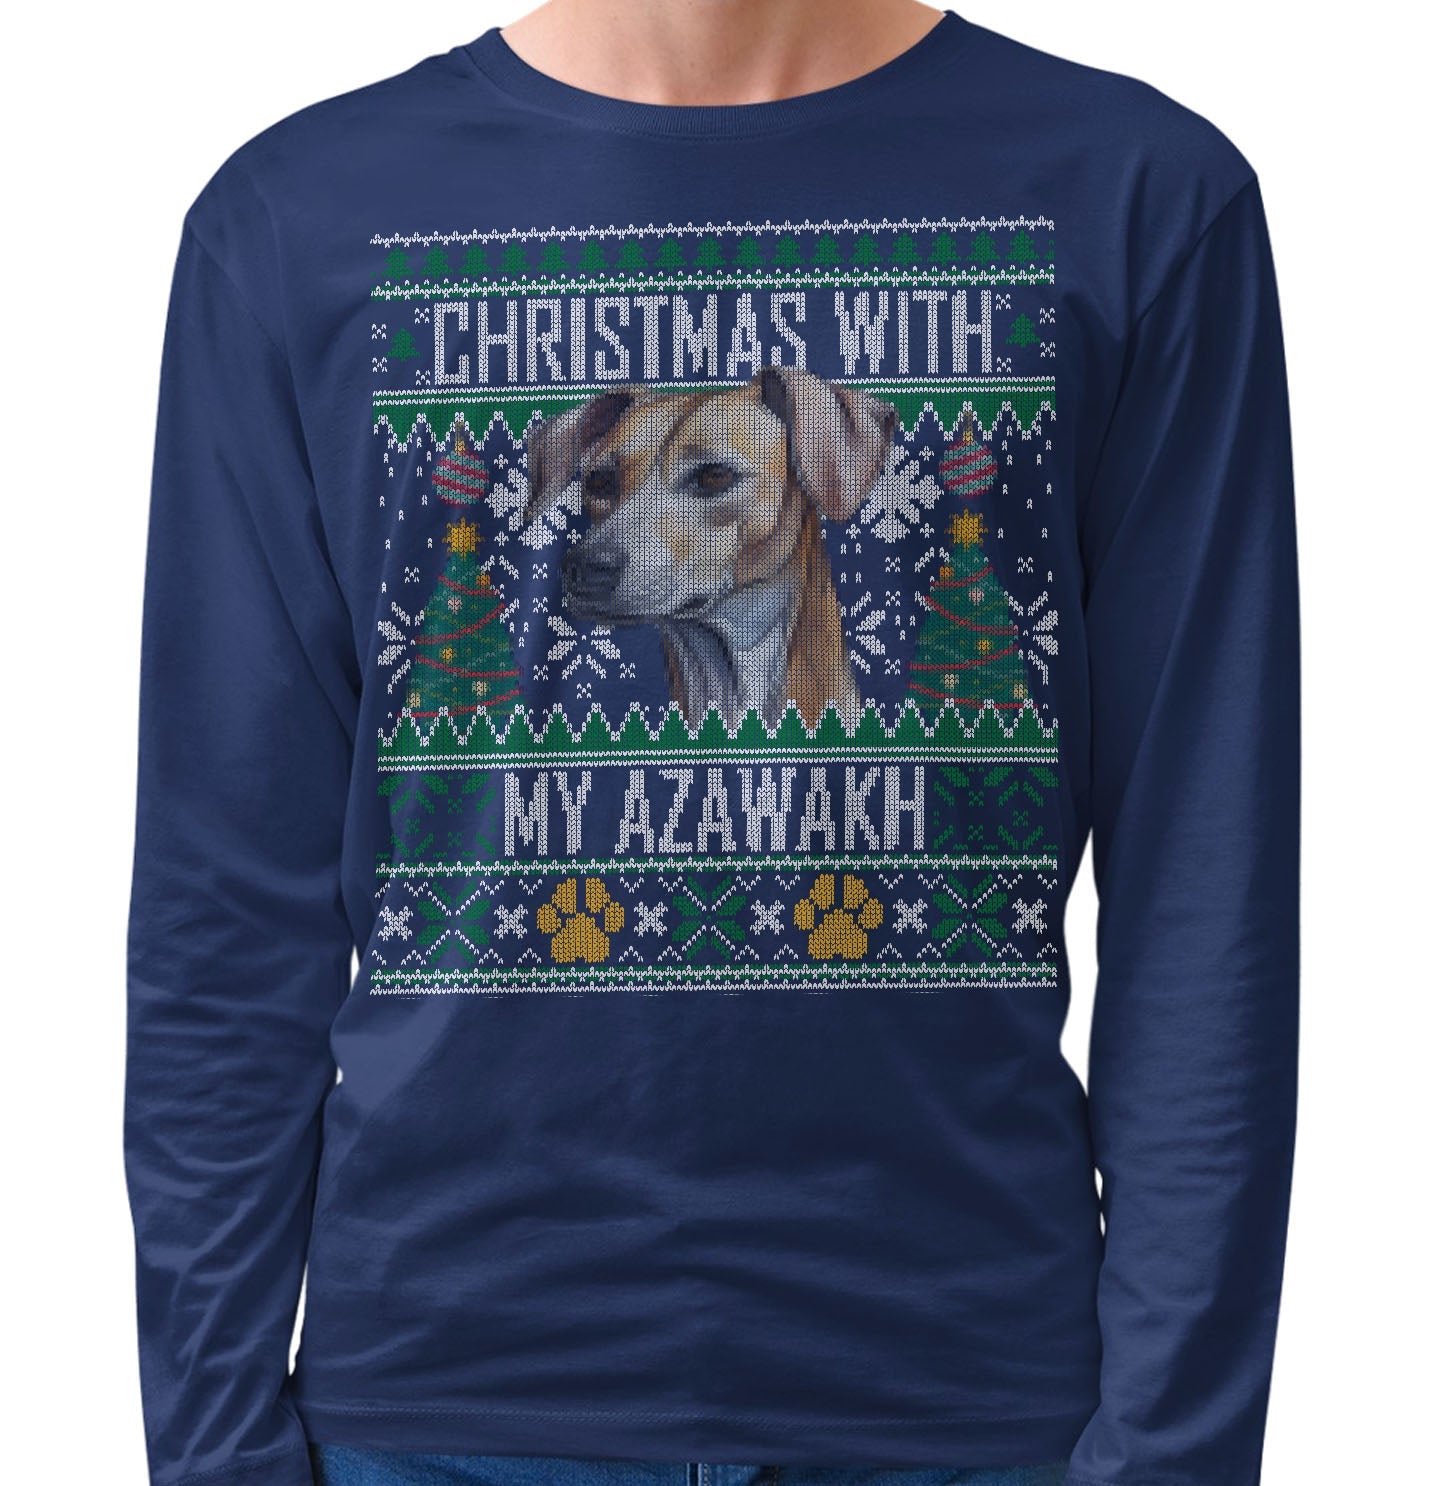 Ugly Sweater Christmas with My Azawakh - Adult Unisex Long Sleeve T-Shirt